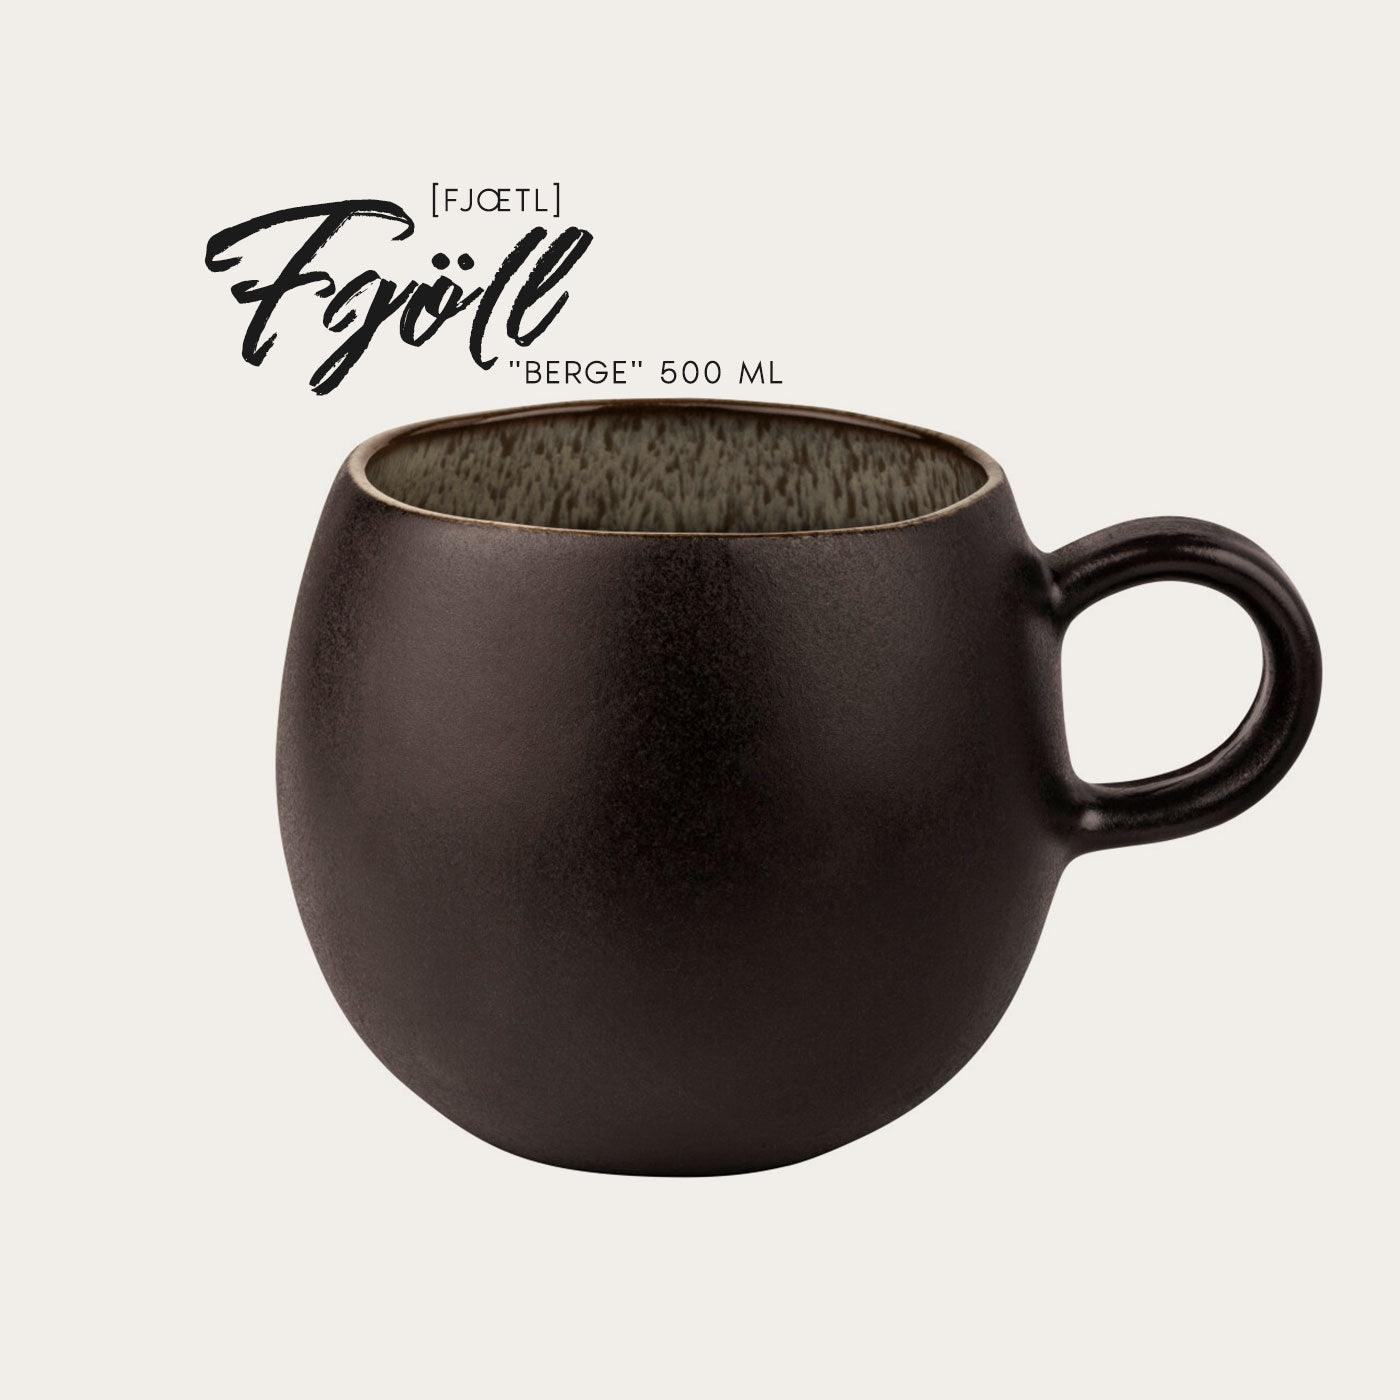 Tee-/Kaffeebecher Fjöll [fjœtl] - 500 ml - 7Tea®